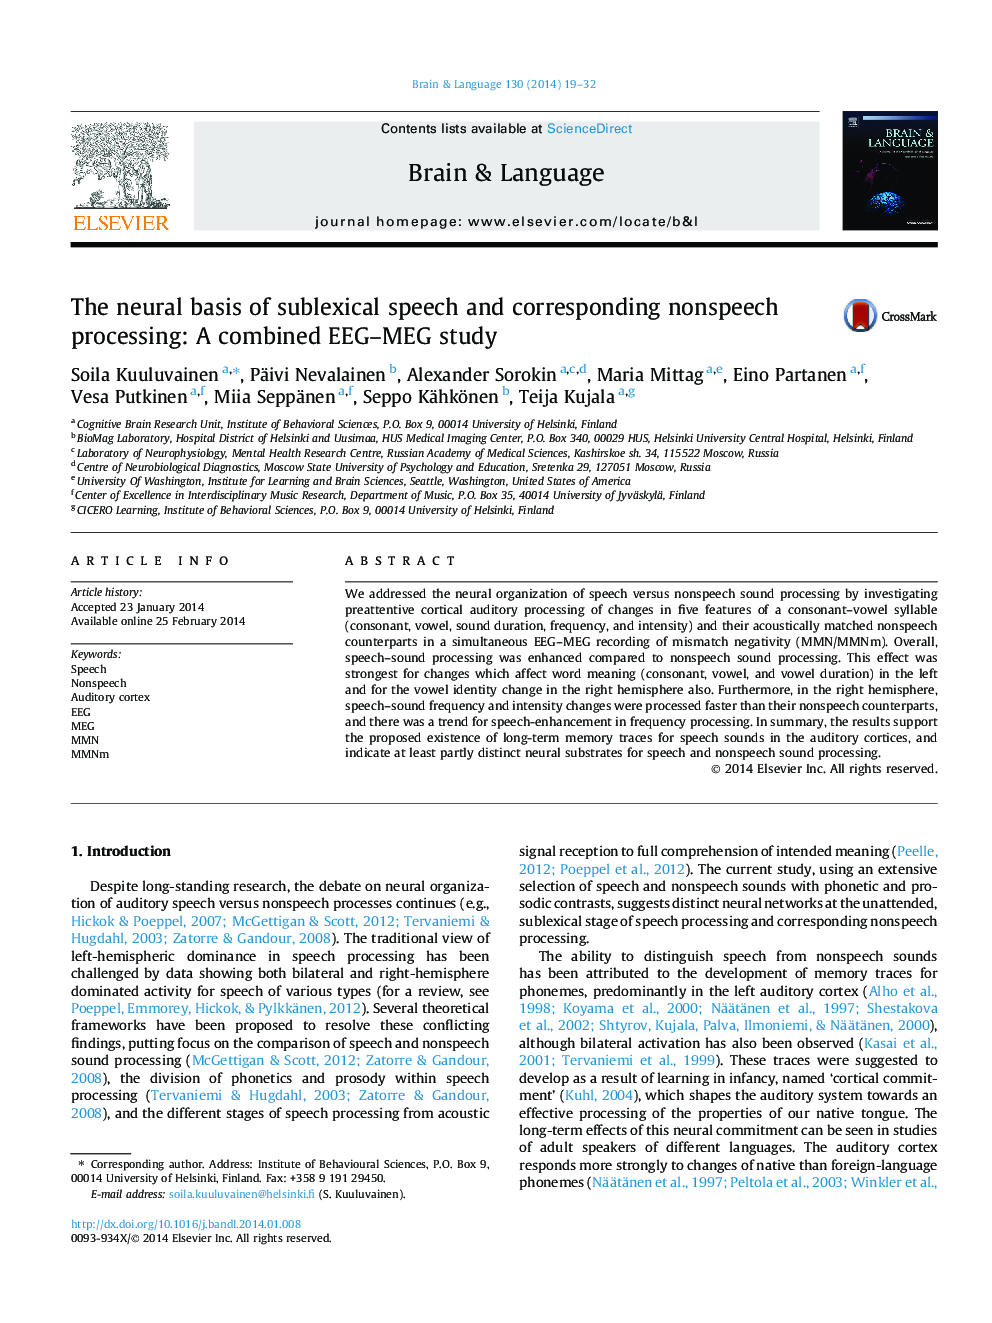 The neural basis of sublexical speech and corresponding nonspeech processing: A combined EEG–MEG study